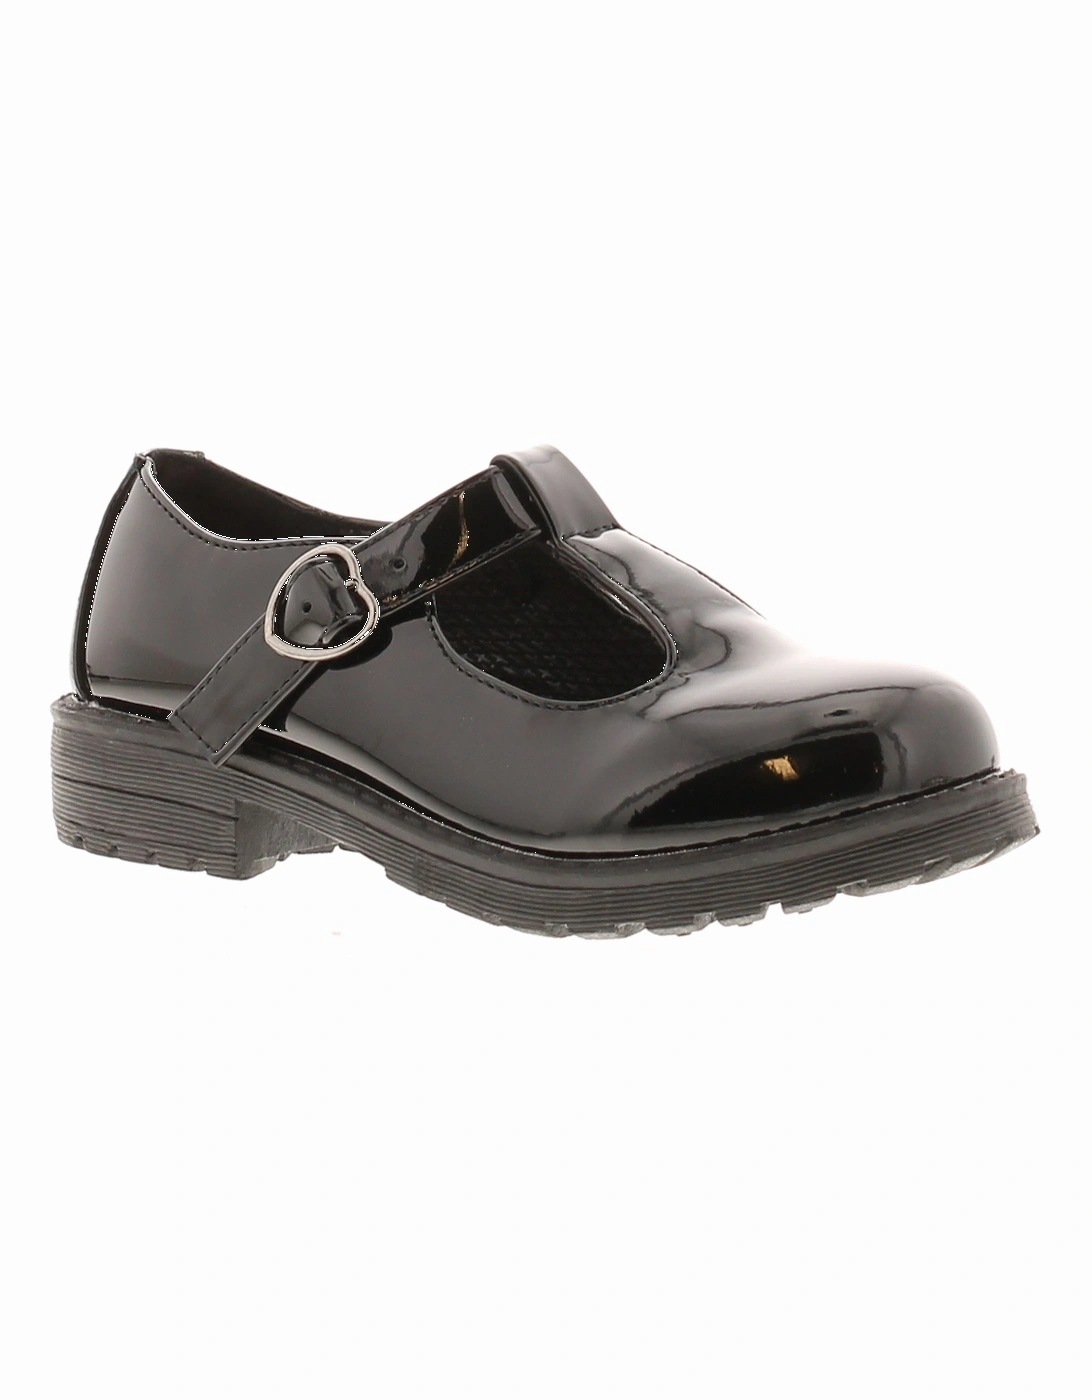 Girls Shoes School Carla black UK Size, 6 of 5